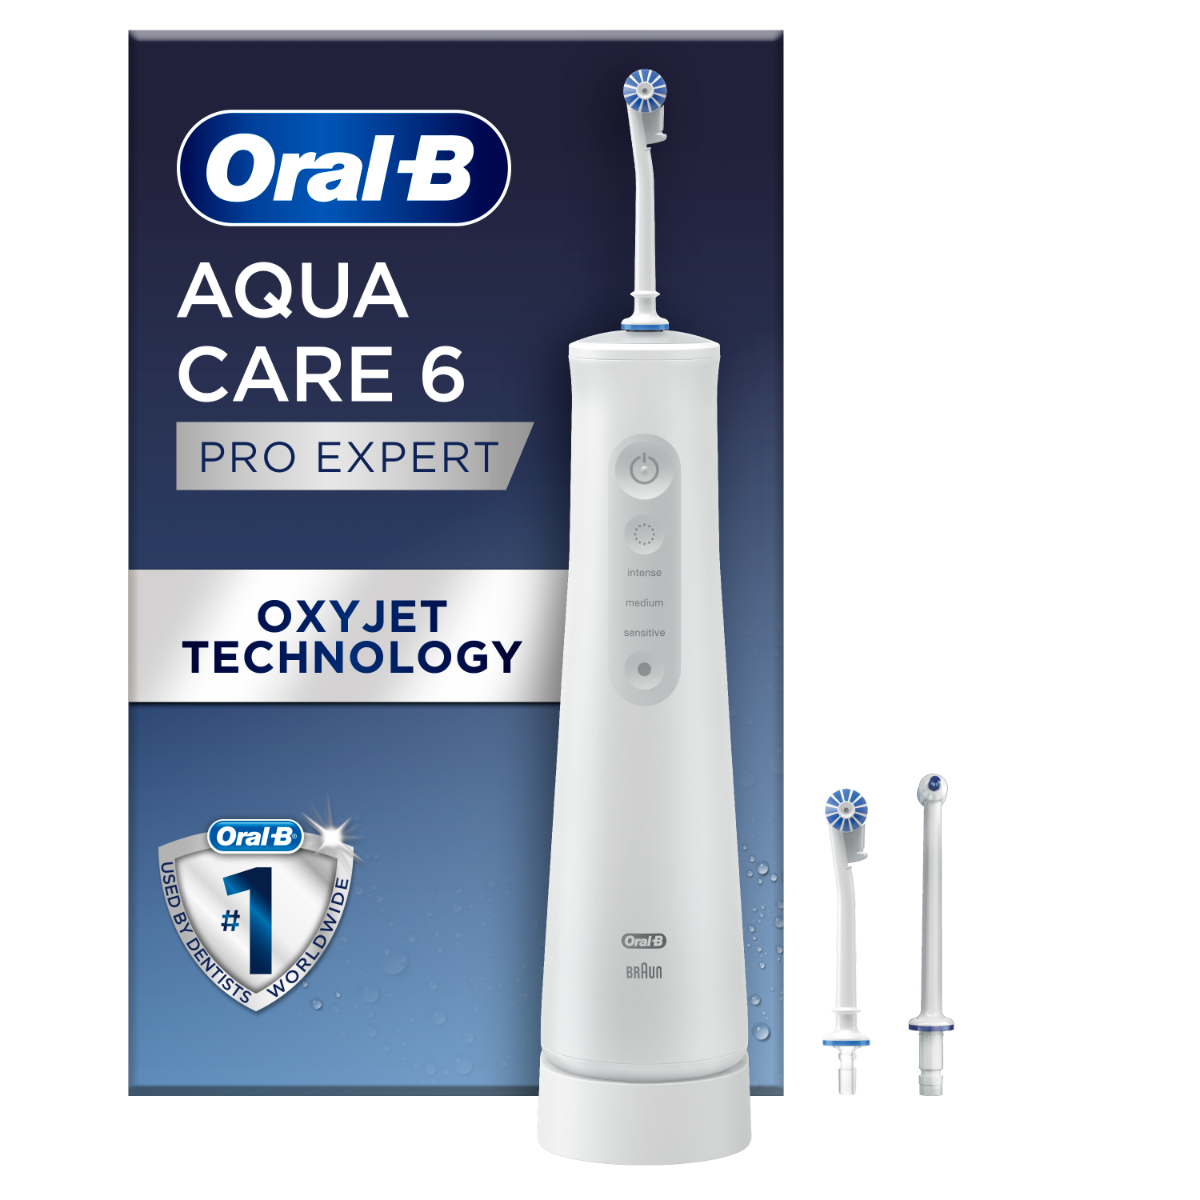 Oral-B Aquacare 6 ústní sprcha Oral-B